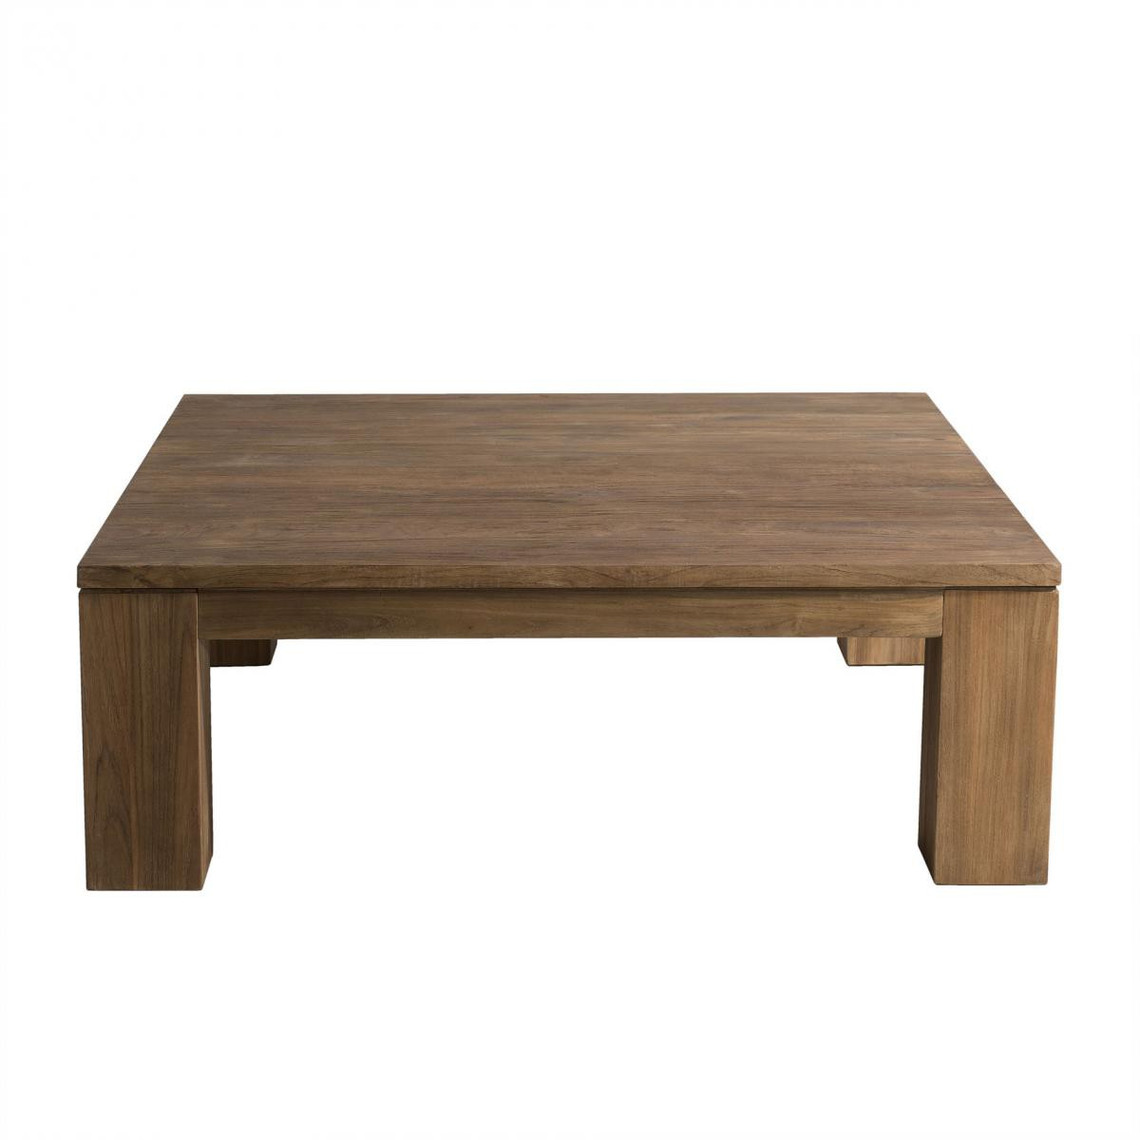 Table basse bois 100 x 100 cm - SIANA